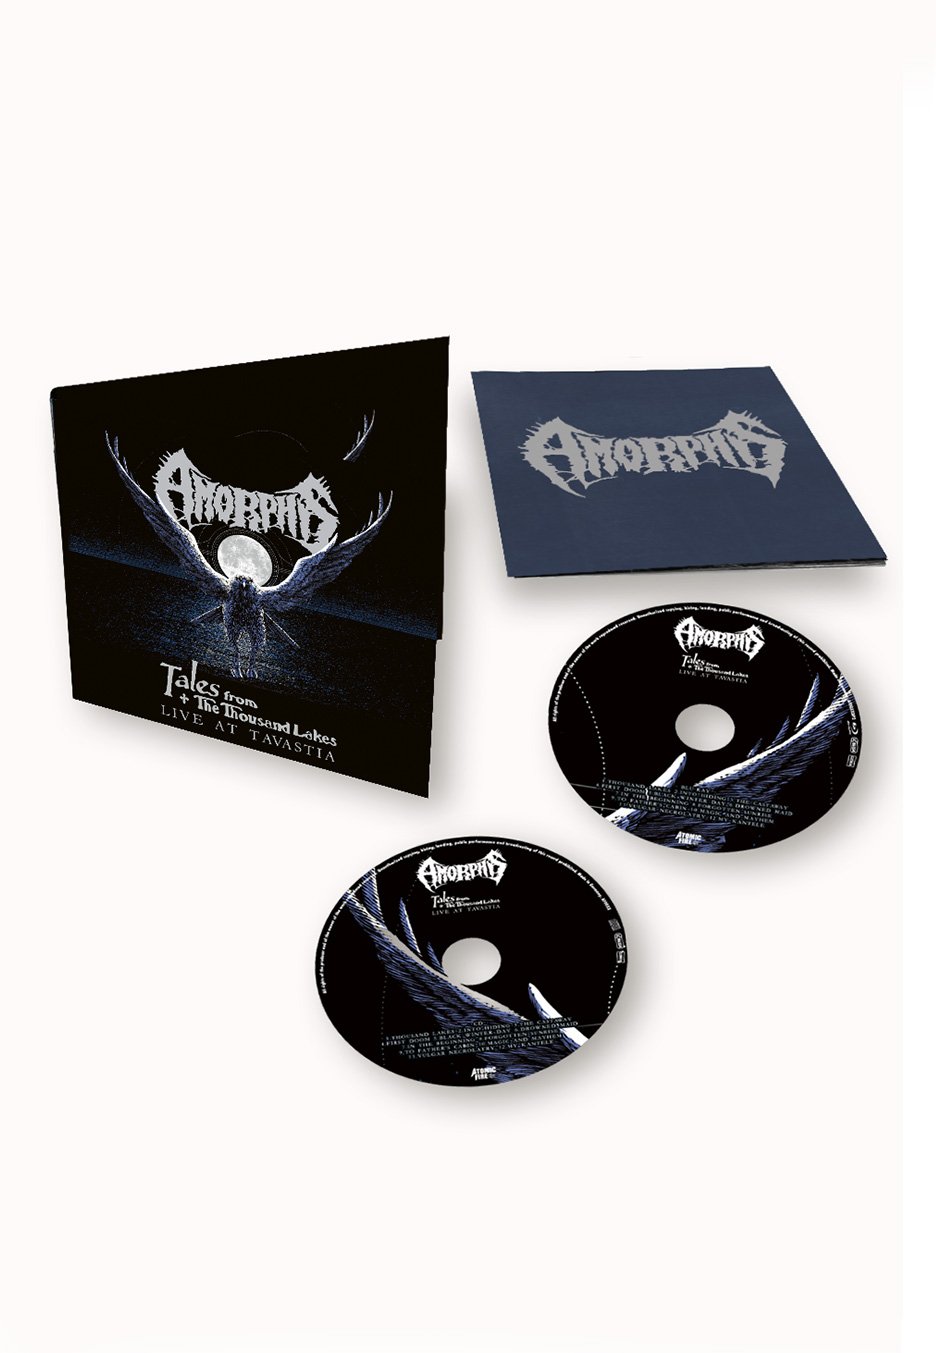 Amorphis - Tales From The Thousand Lakes (Live At Tavastia) Ltd. Edition - Digipak-CD + Blu Ray